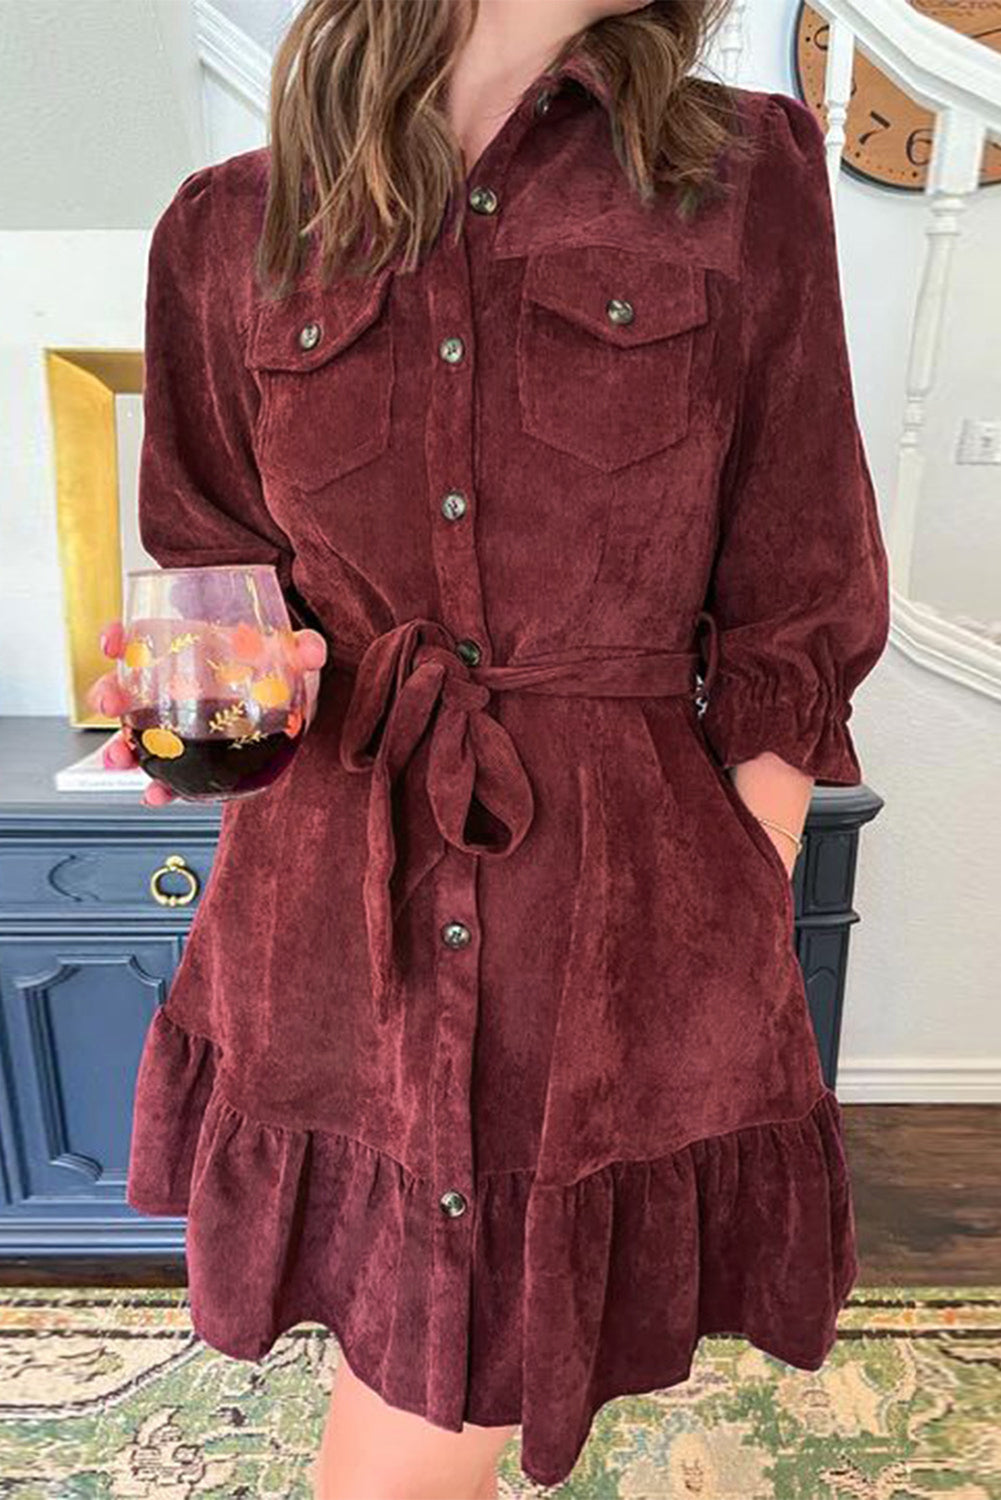 Red Dahlia Collared Buttons Corduroy Shirt Dress